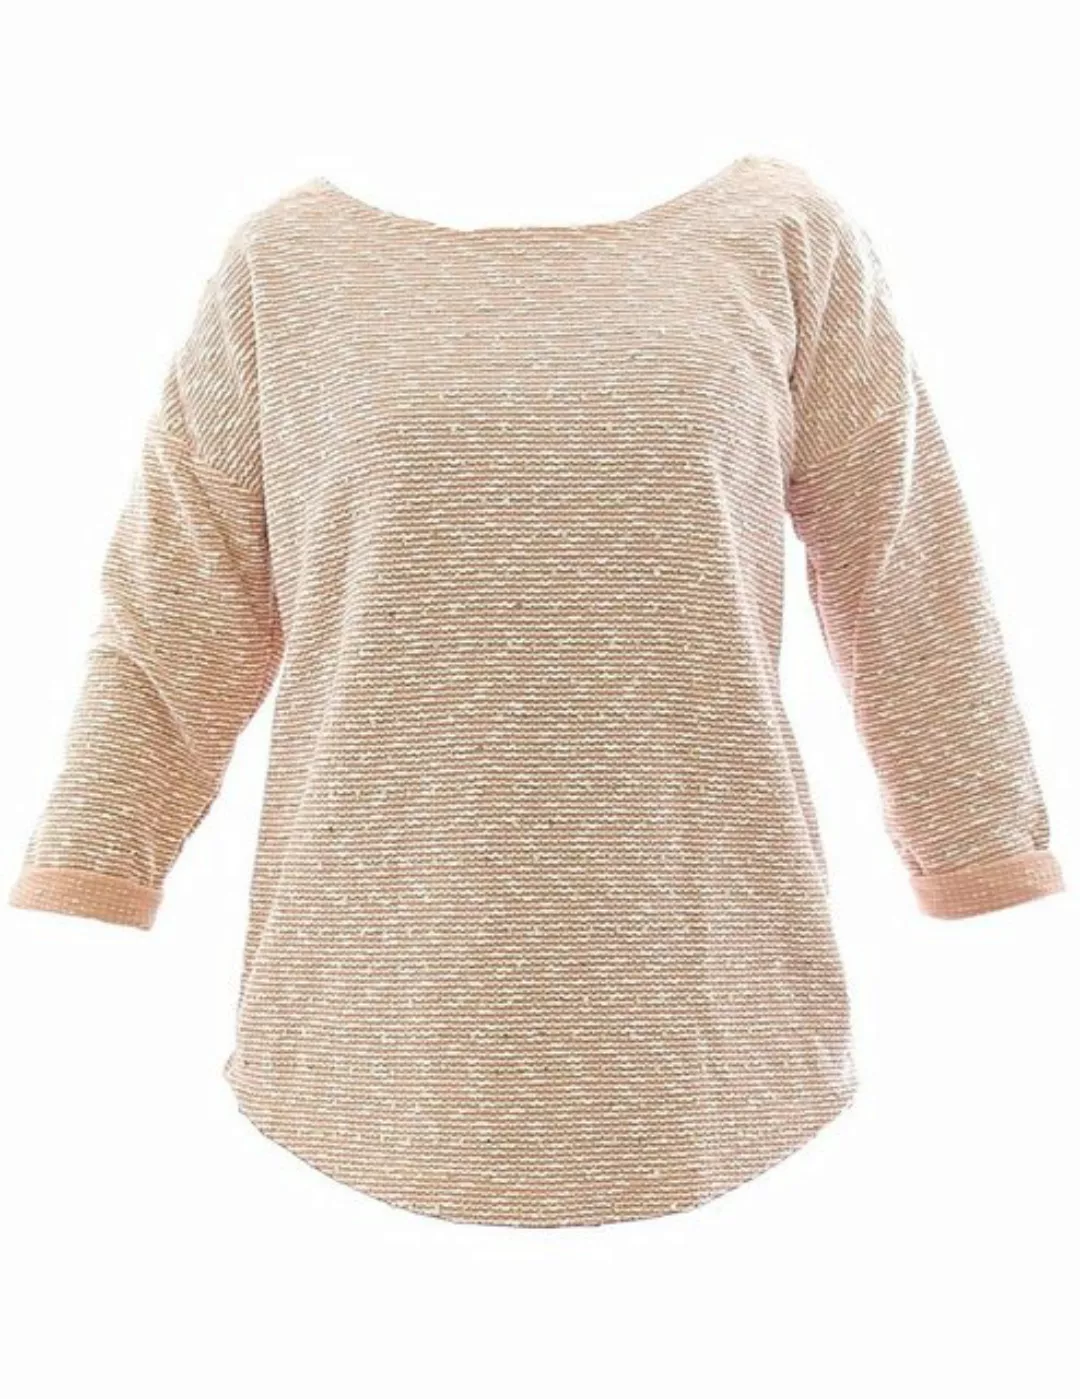 YESET 3/4-Arm-Shirt Damen Shirt 3/4 Arm Bluse Tunika TP-221 günstig online kaufen